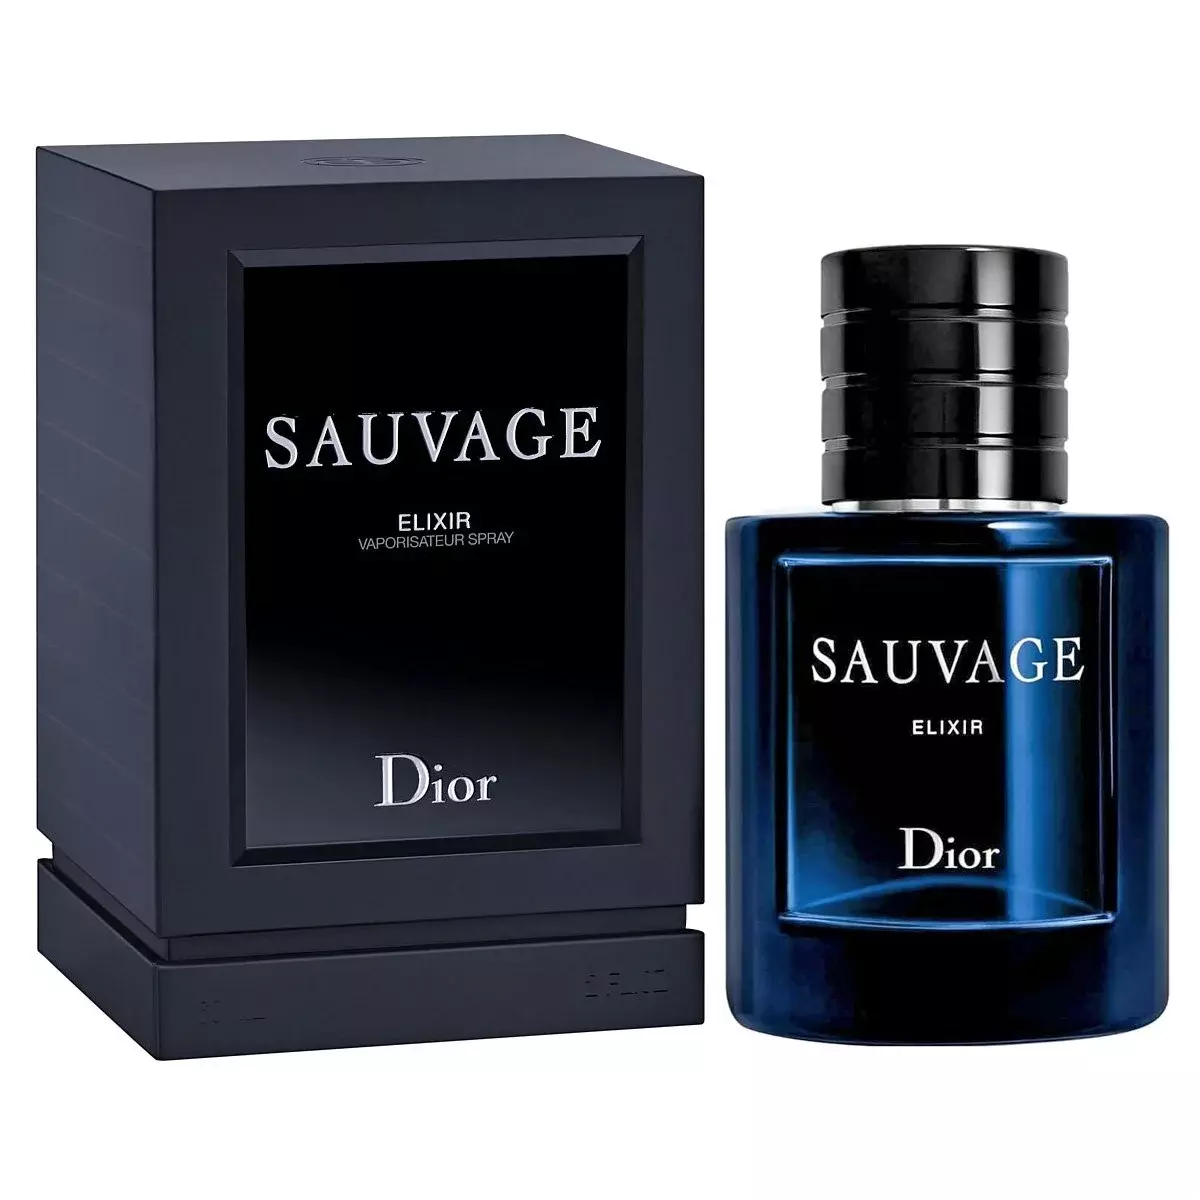 Dior Sauvage мужские духи диор саваж духи диор 100мл Dior 119349751  купить в интернетмагазине Wildberries